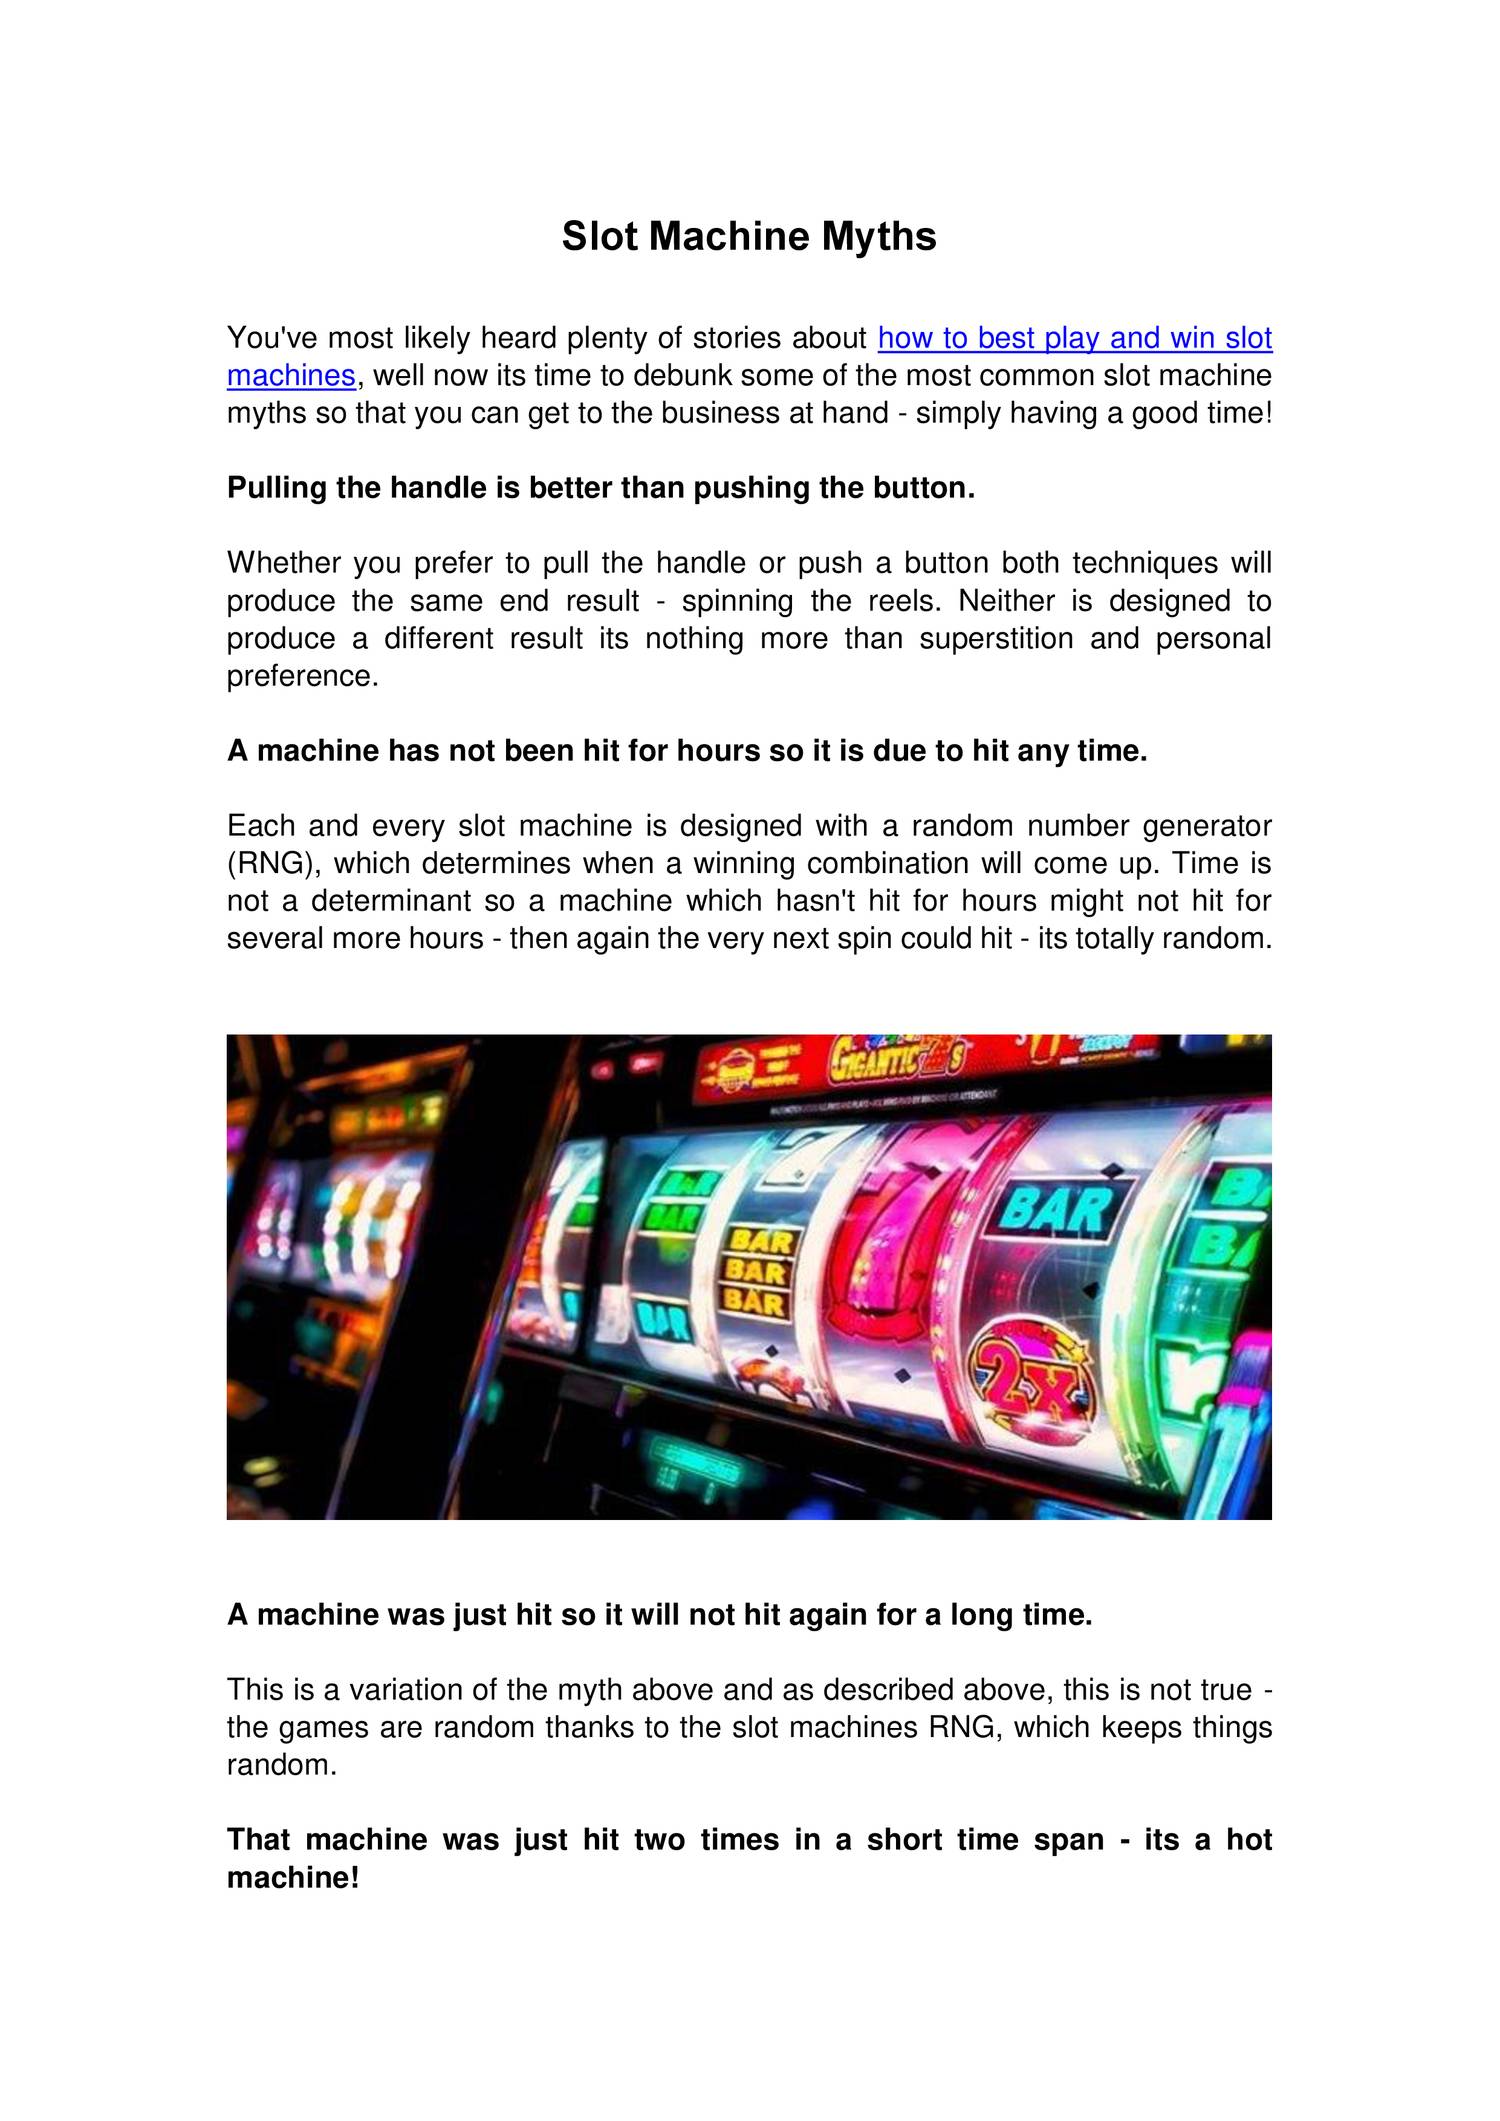 Slot machine myths